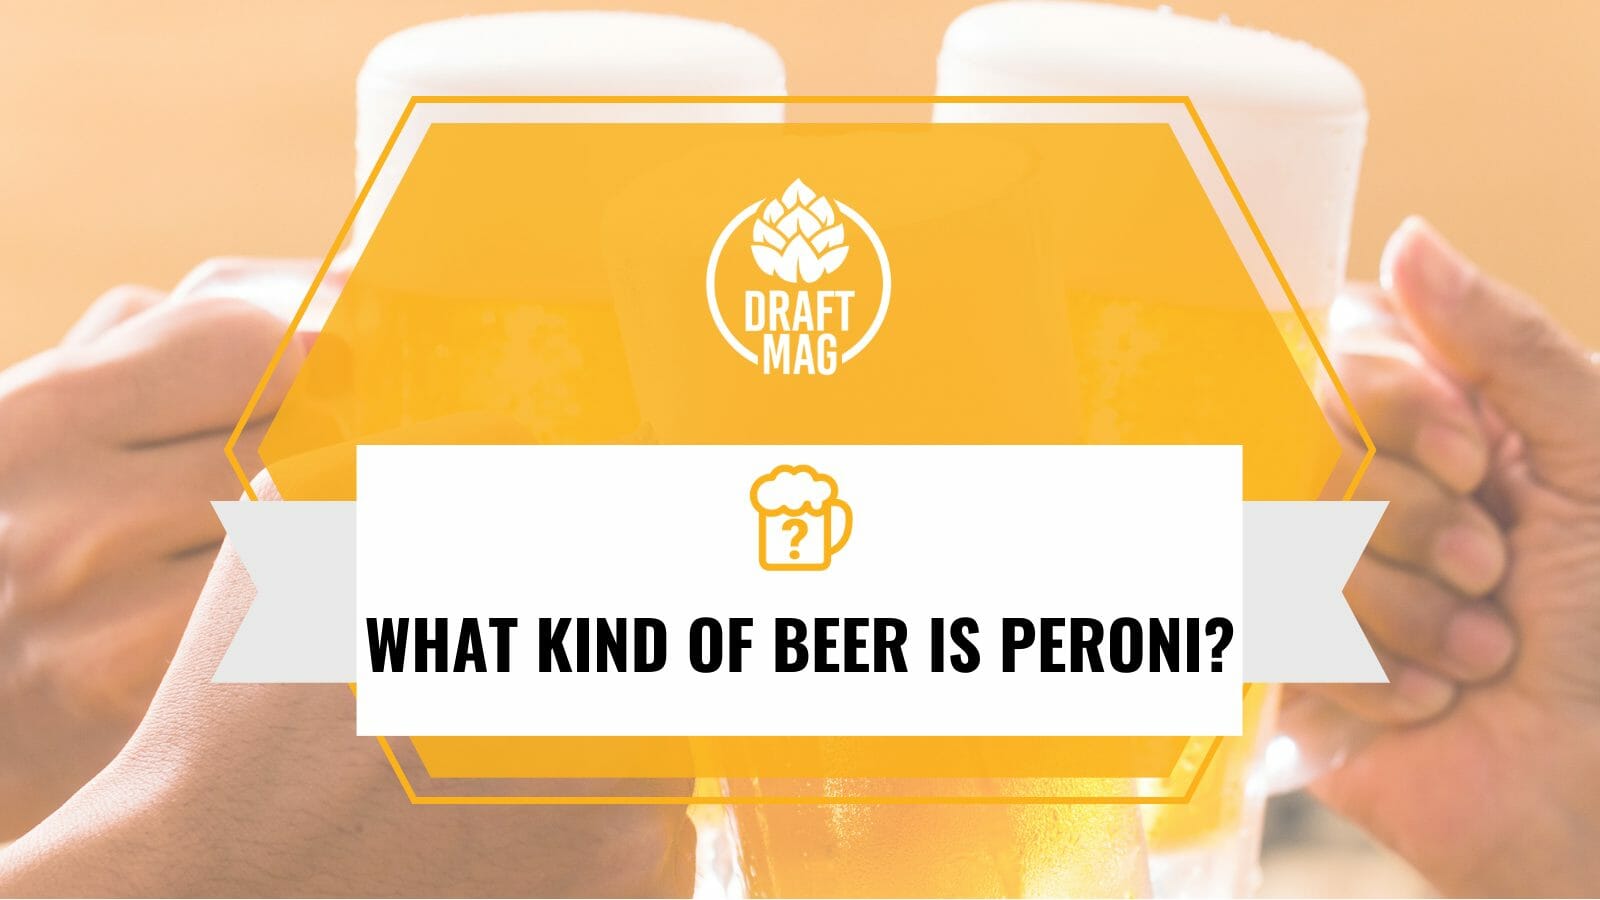 What kind of beer is peroni